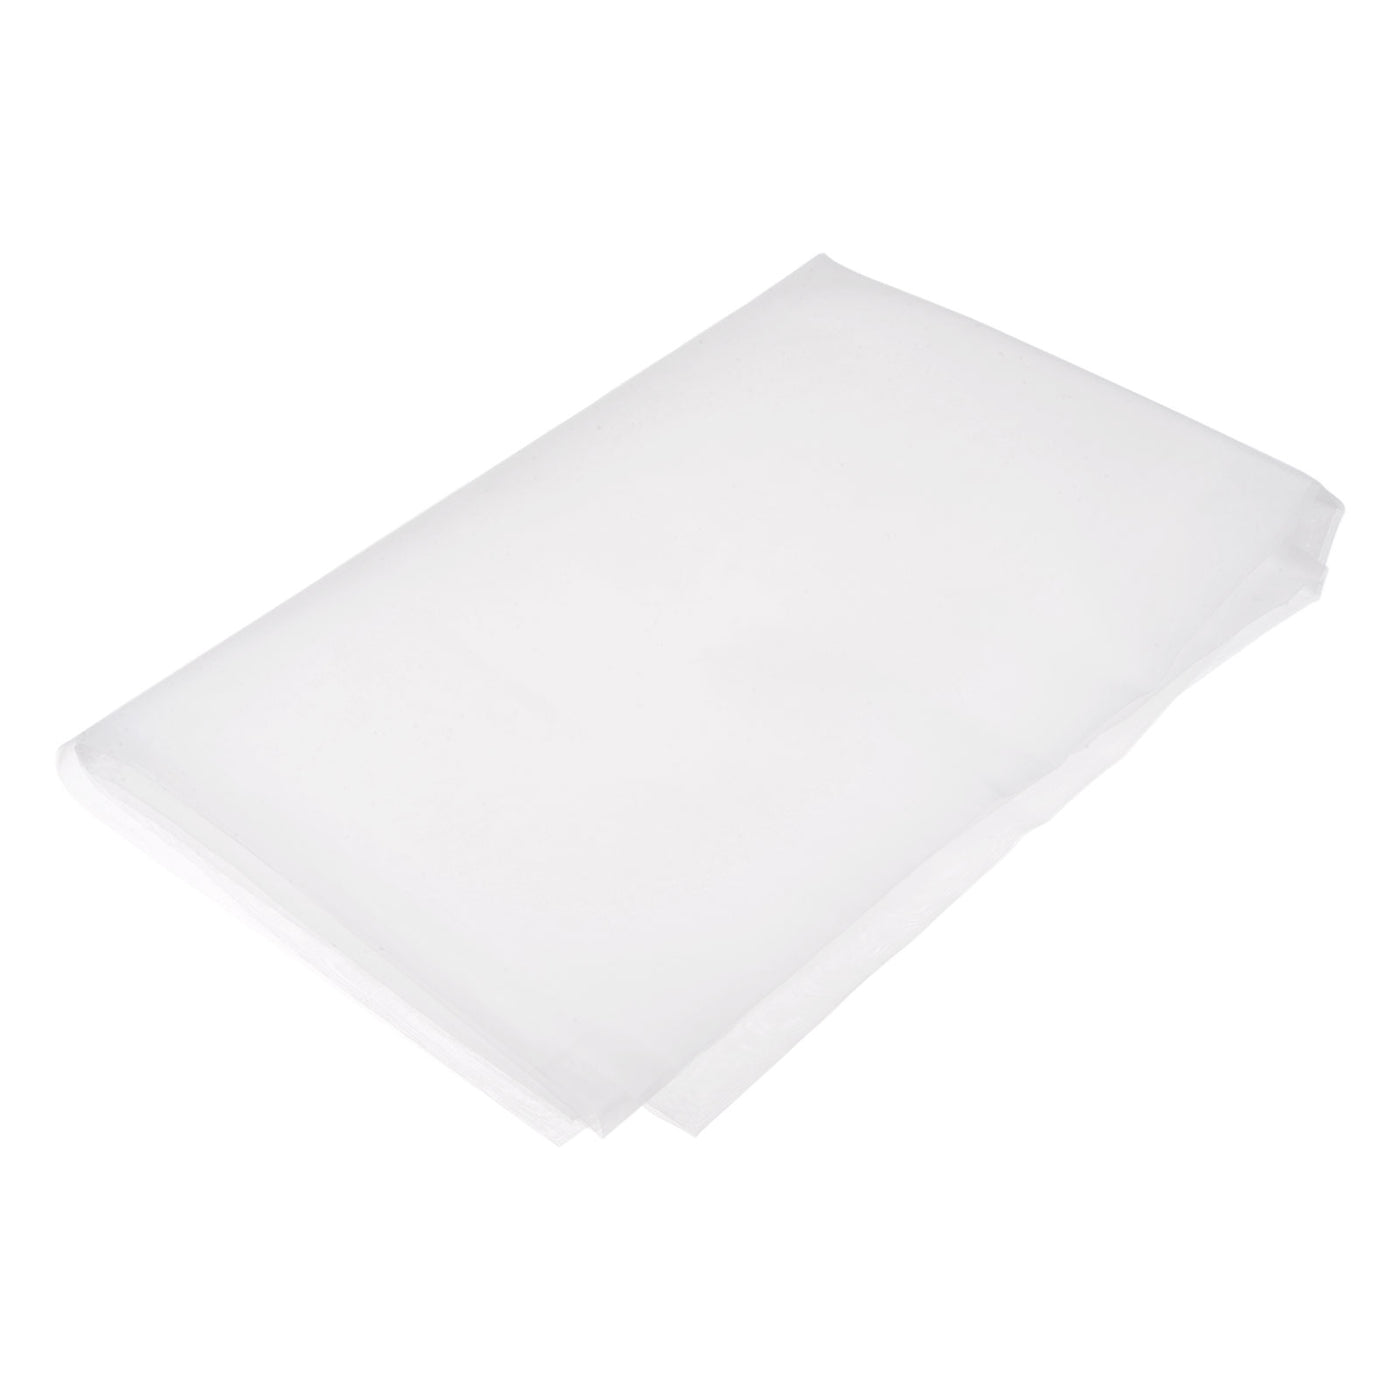 uxcell Uxcell 150 Micron Paint Nylon Mesh Filter Woven Net Sheet Filter Cloth (39"x39")